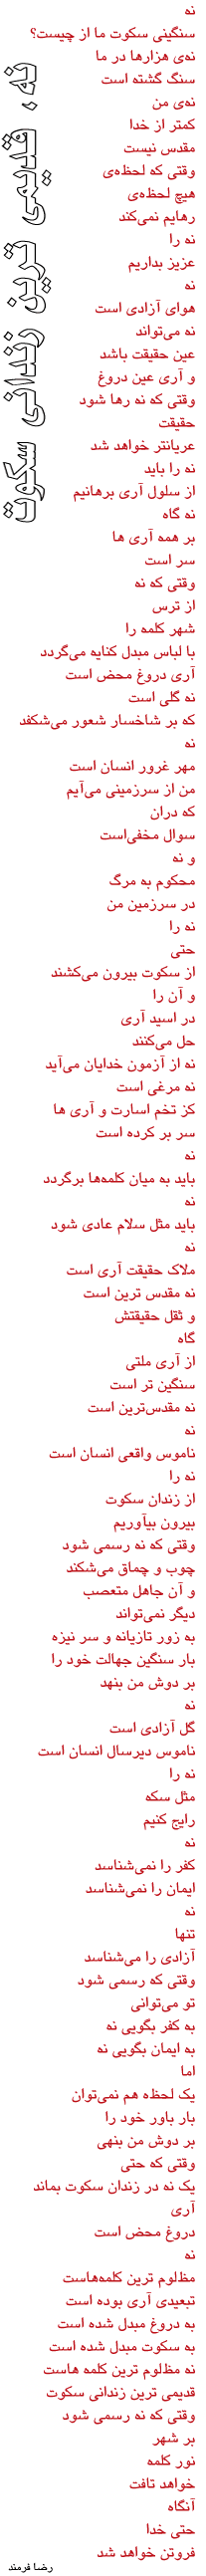 Poem by Reza Farmand